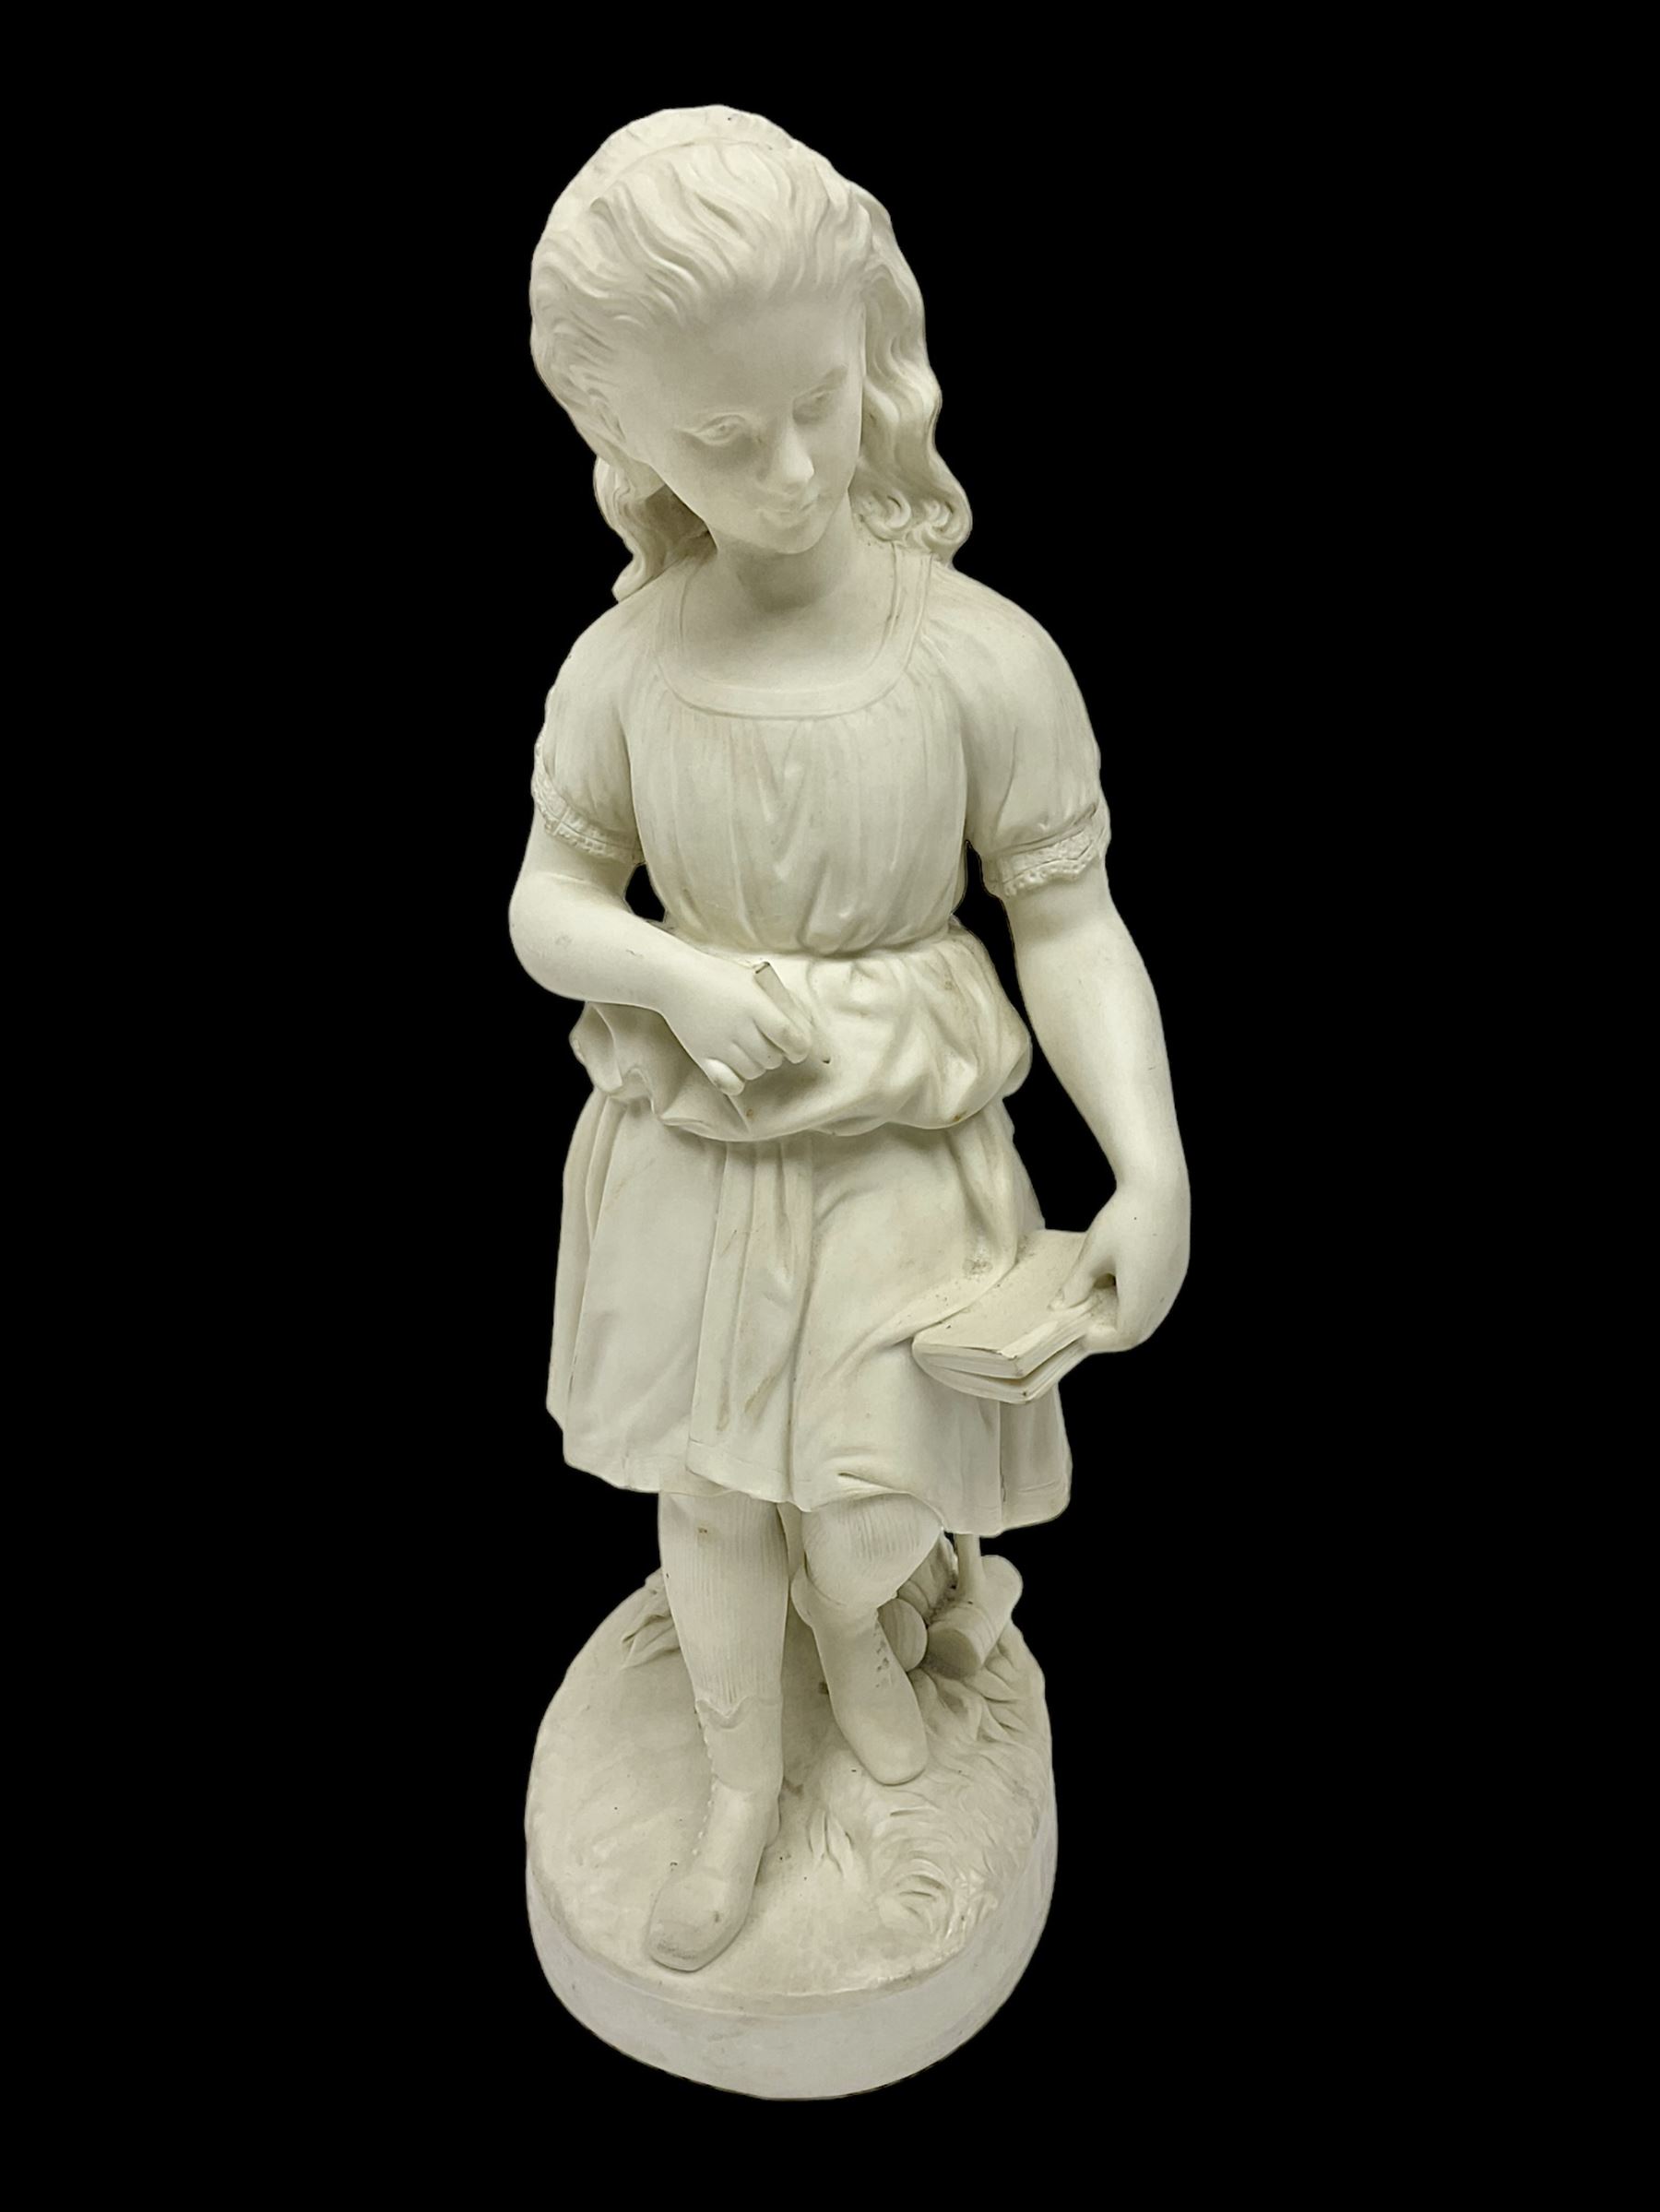 19th century Copeland Parian Ware figure